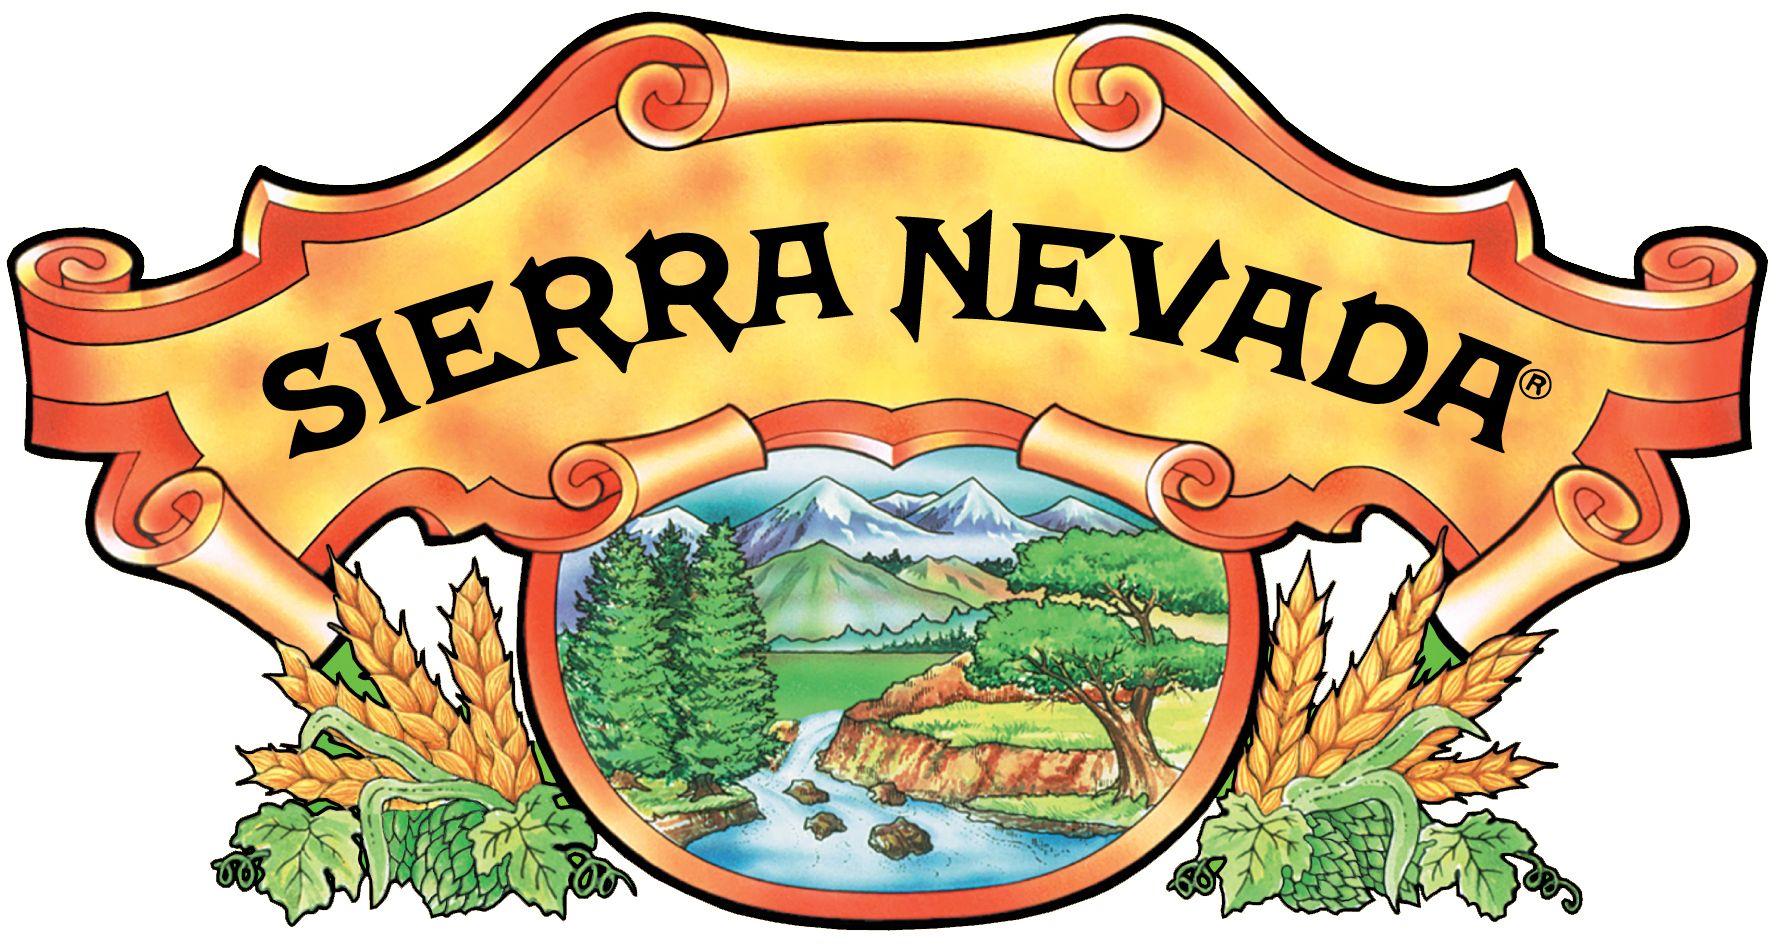 Sierra Water Logo - Sierra Nevada Finds Rich Water Source | Independent Beers